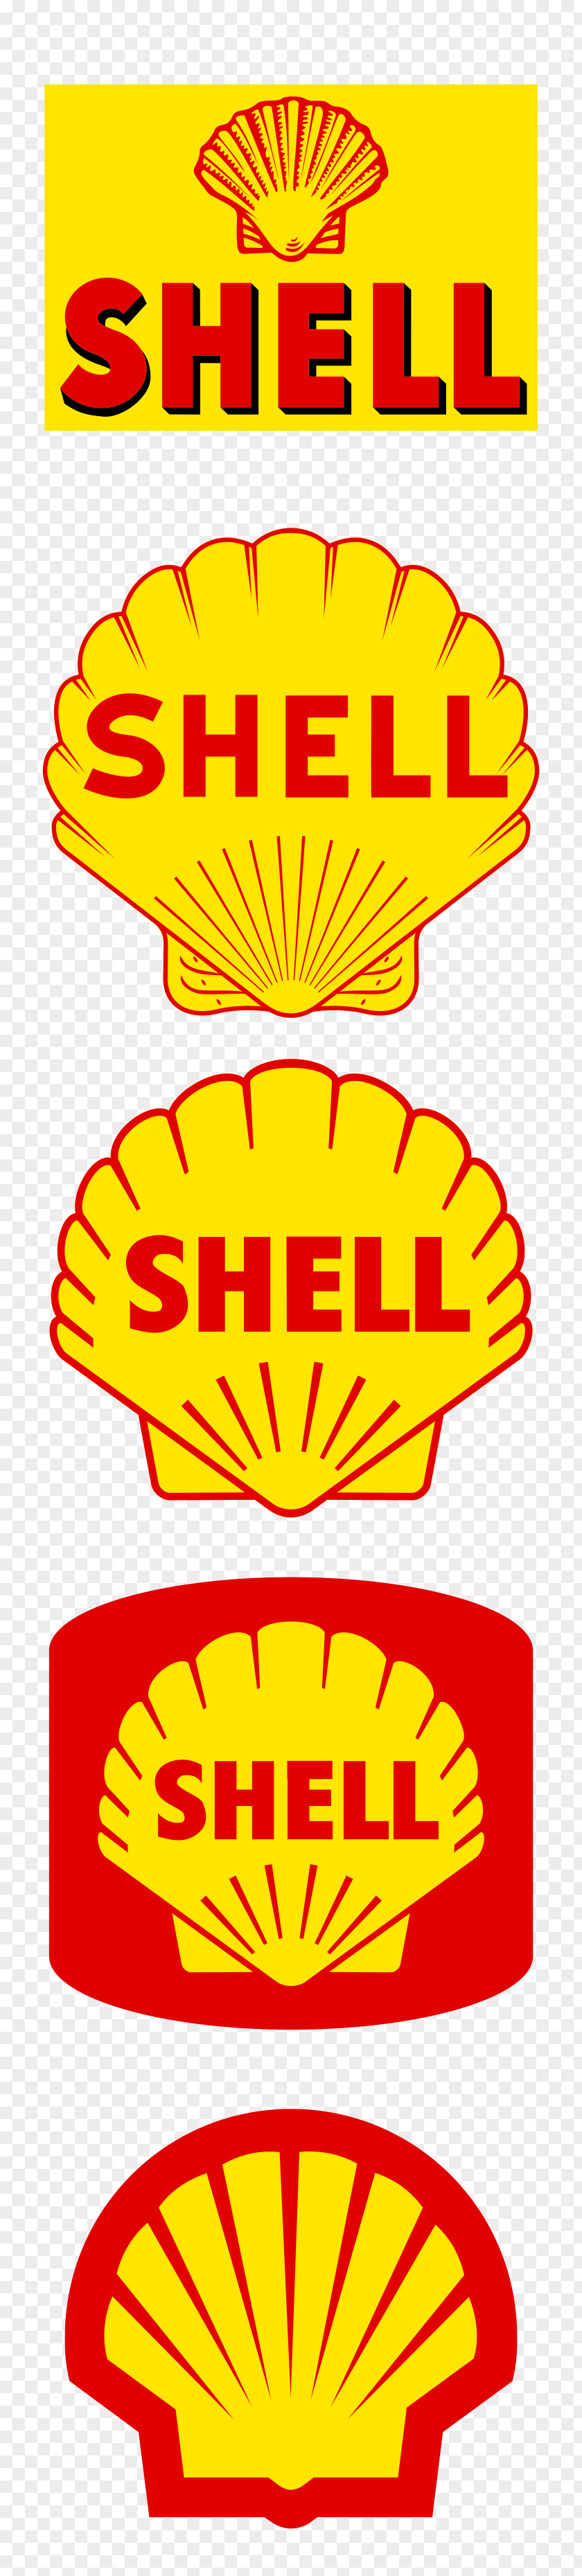 Royal Dutch Shell Chevron Corporation Logo Standard Oil Petroleum PNG